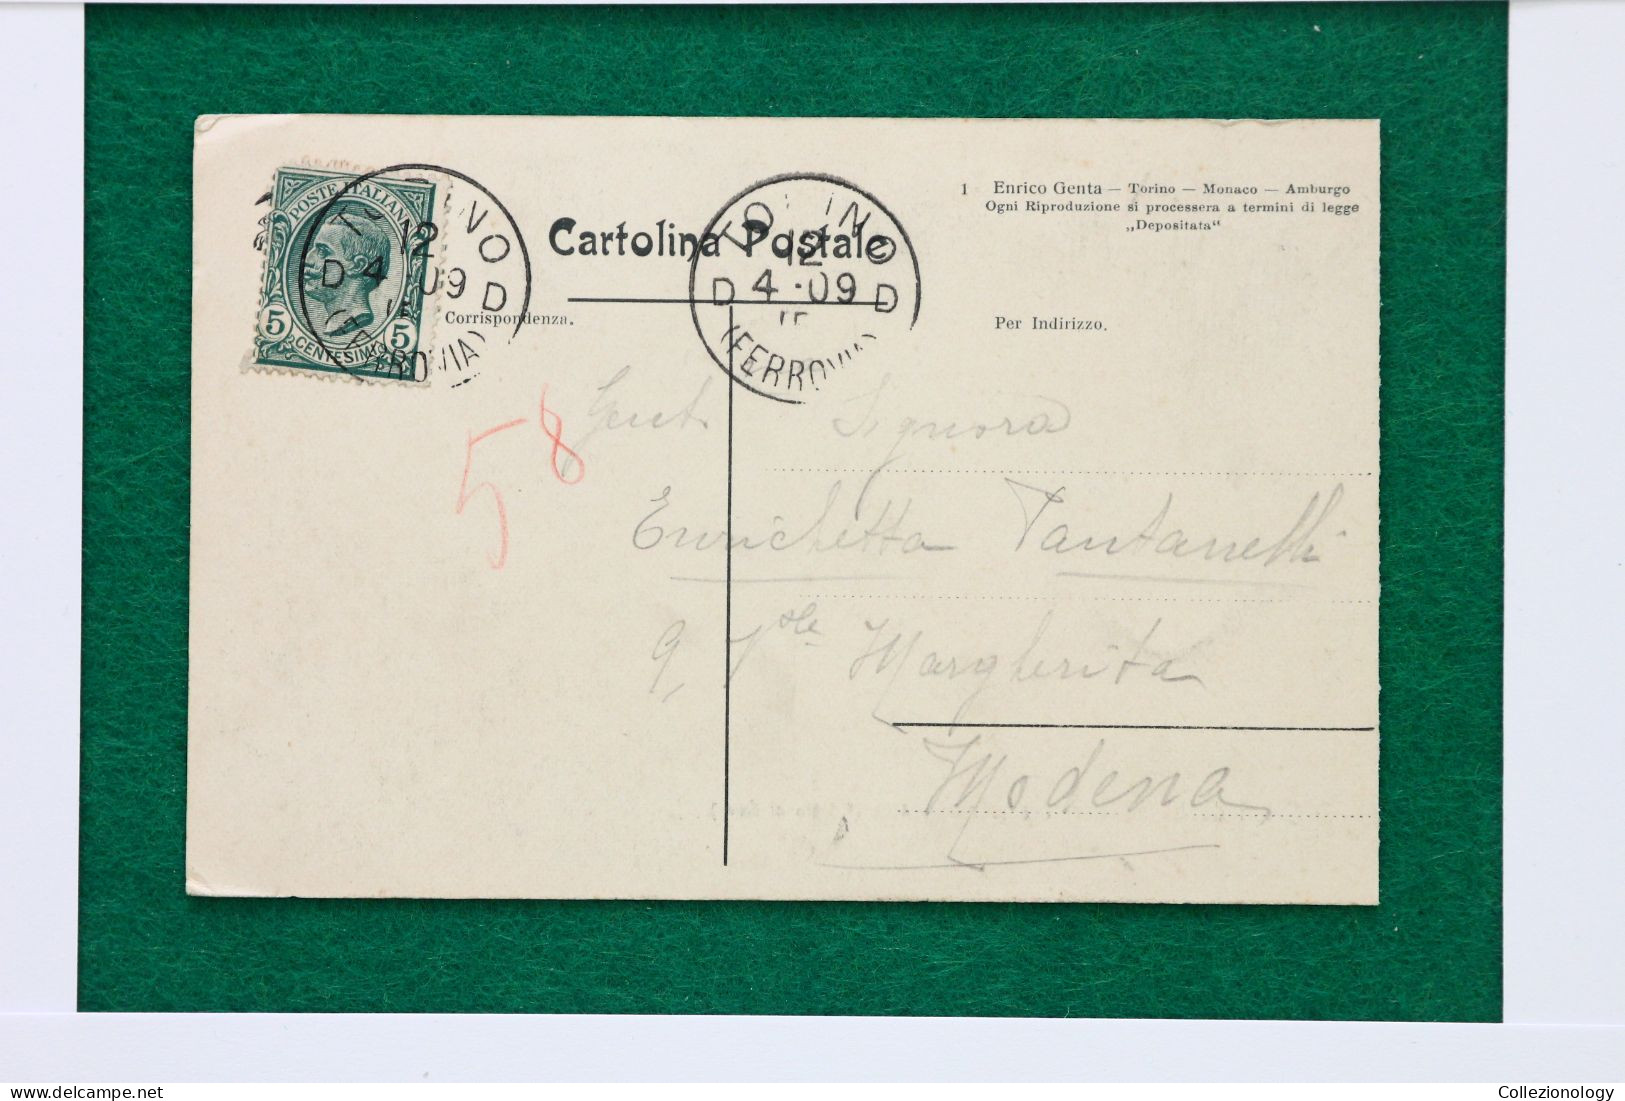 CARTOLINA POSTALE VIAGGIATA 1909 LANZO TORINESE (TORINO), PIEMONTE, ITALIA: EFFETTO DI NEVE 0022 POSTCARD - Mehransichten, Panoramakarten